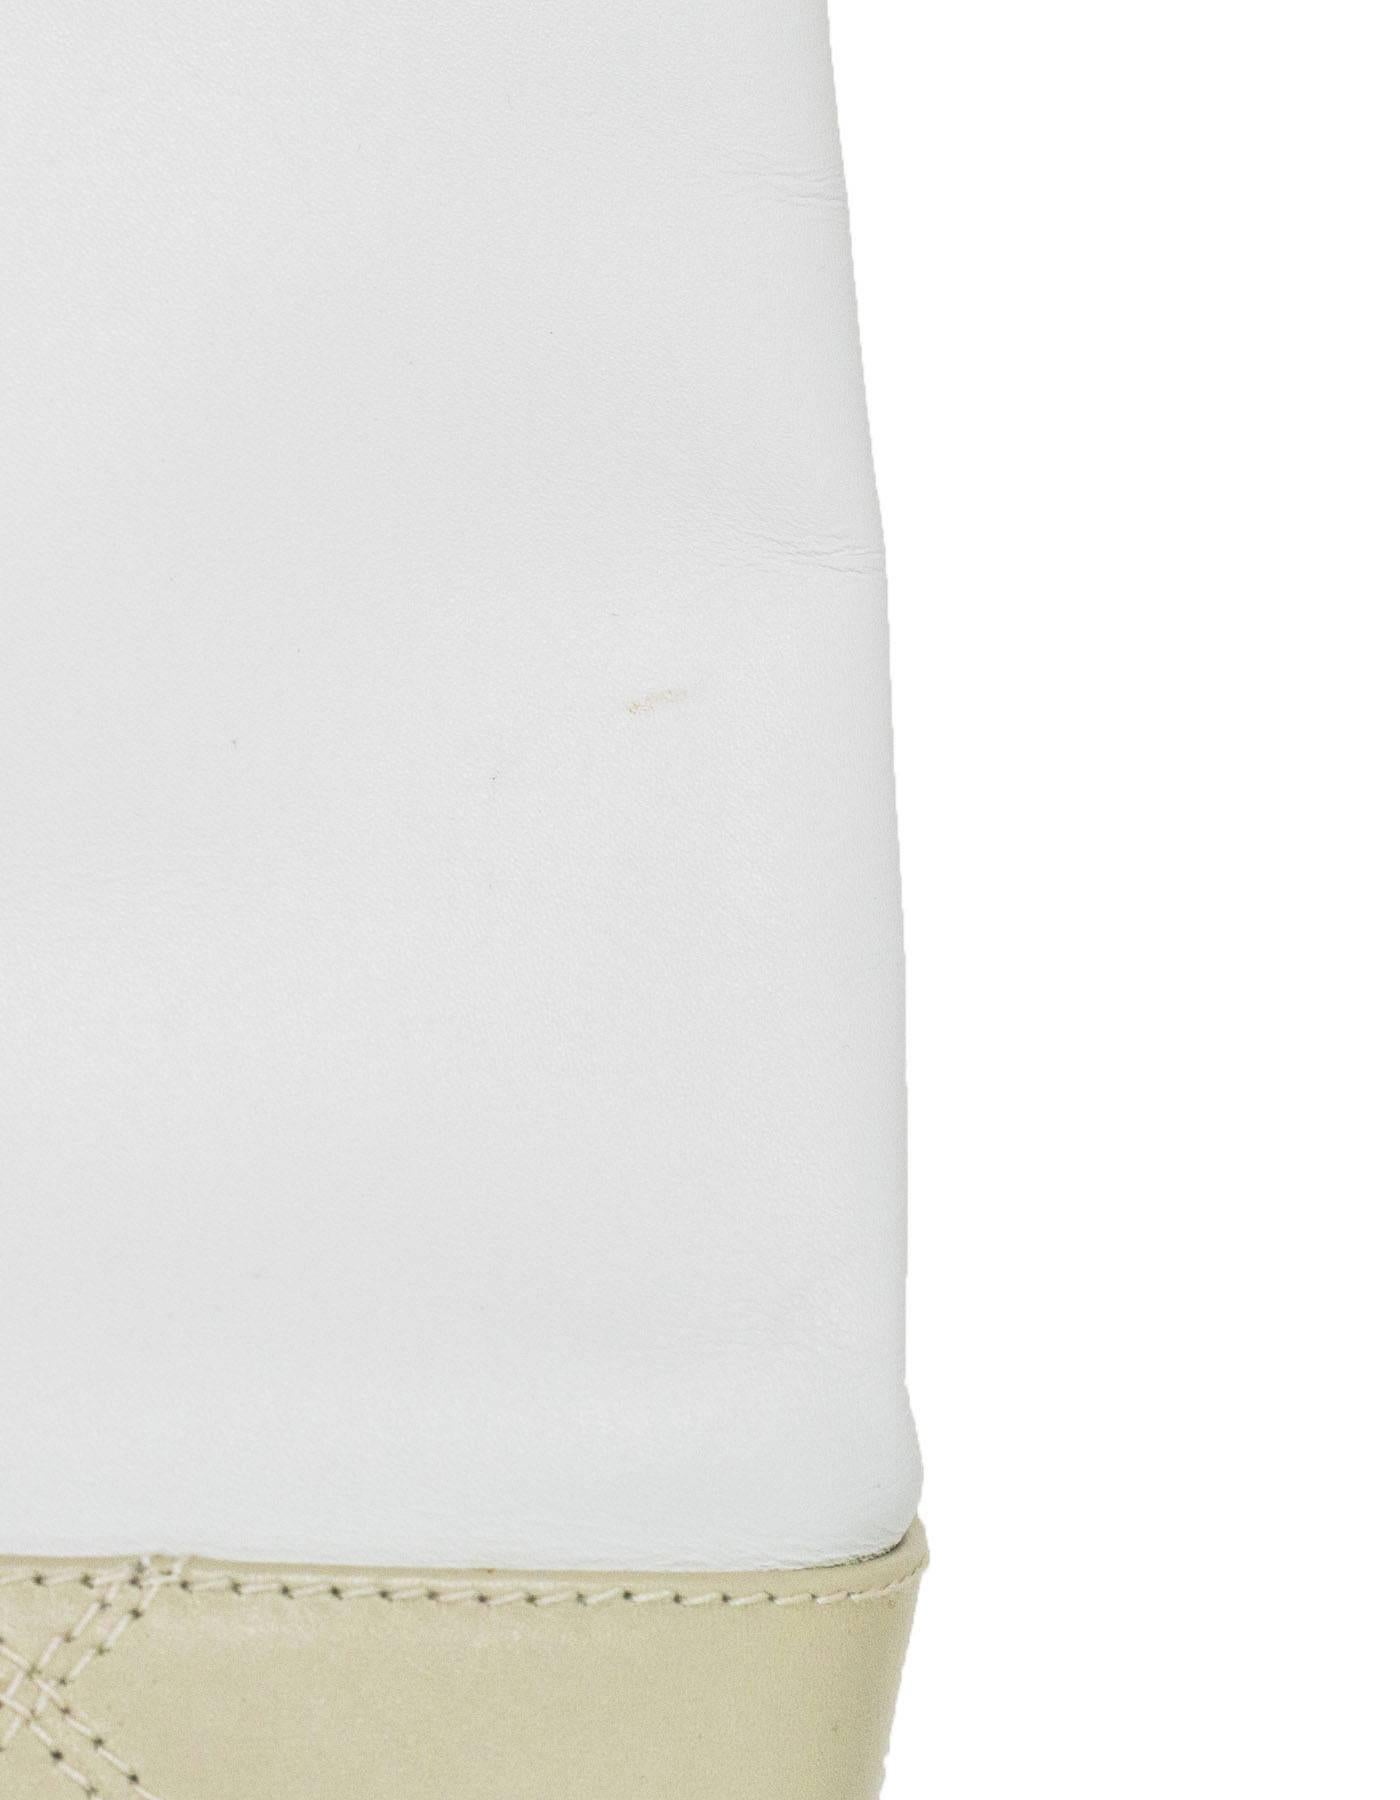 Salvatore Ferragamo White & Beige Leather Crossbody Bag 1